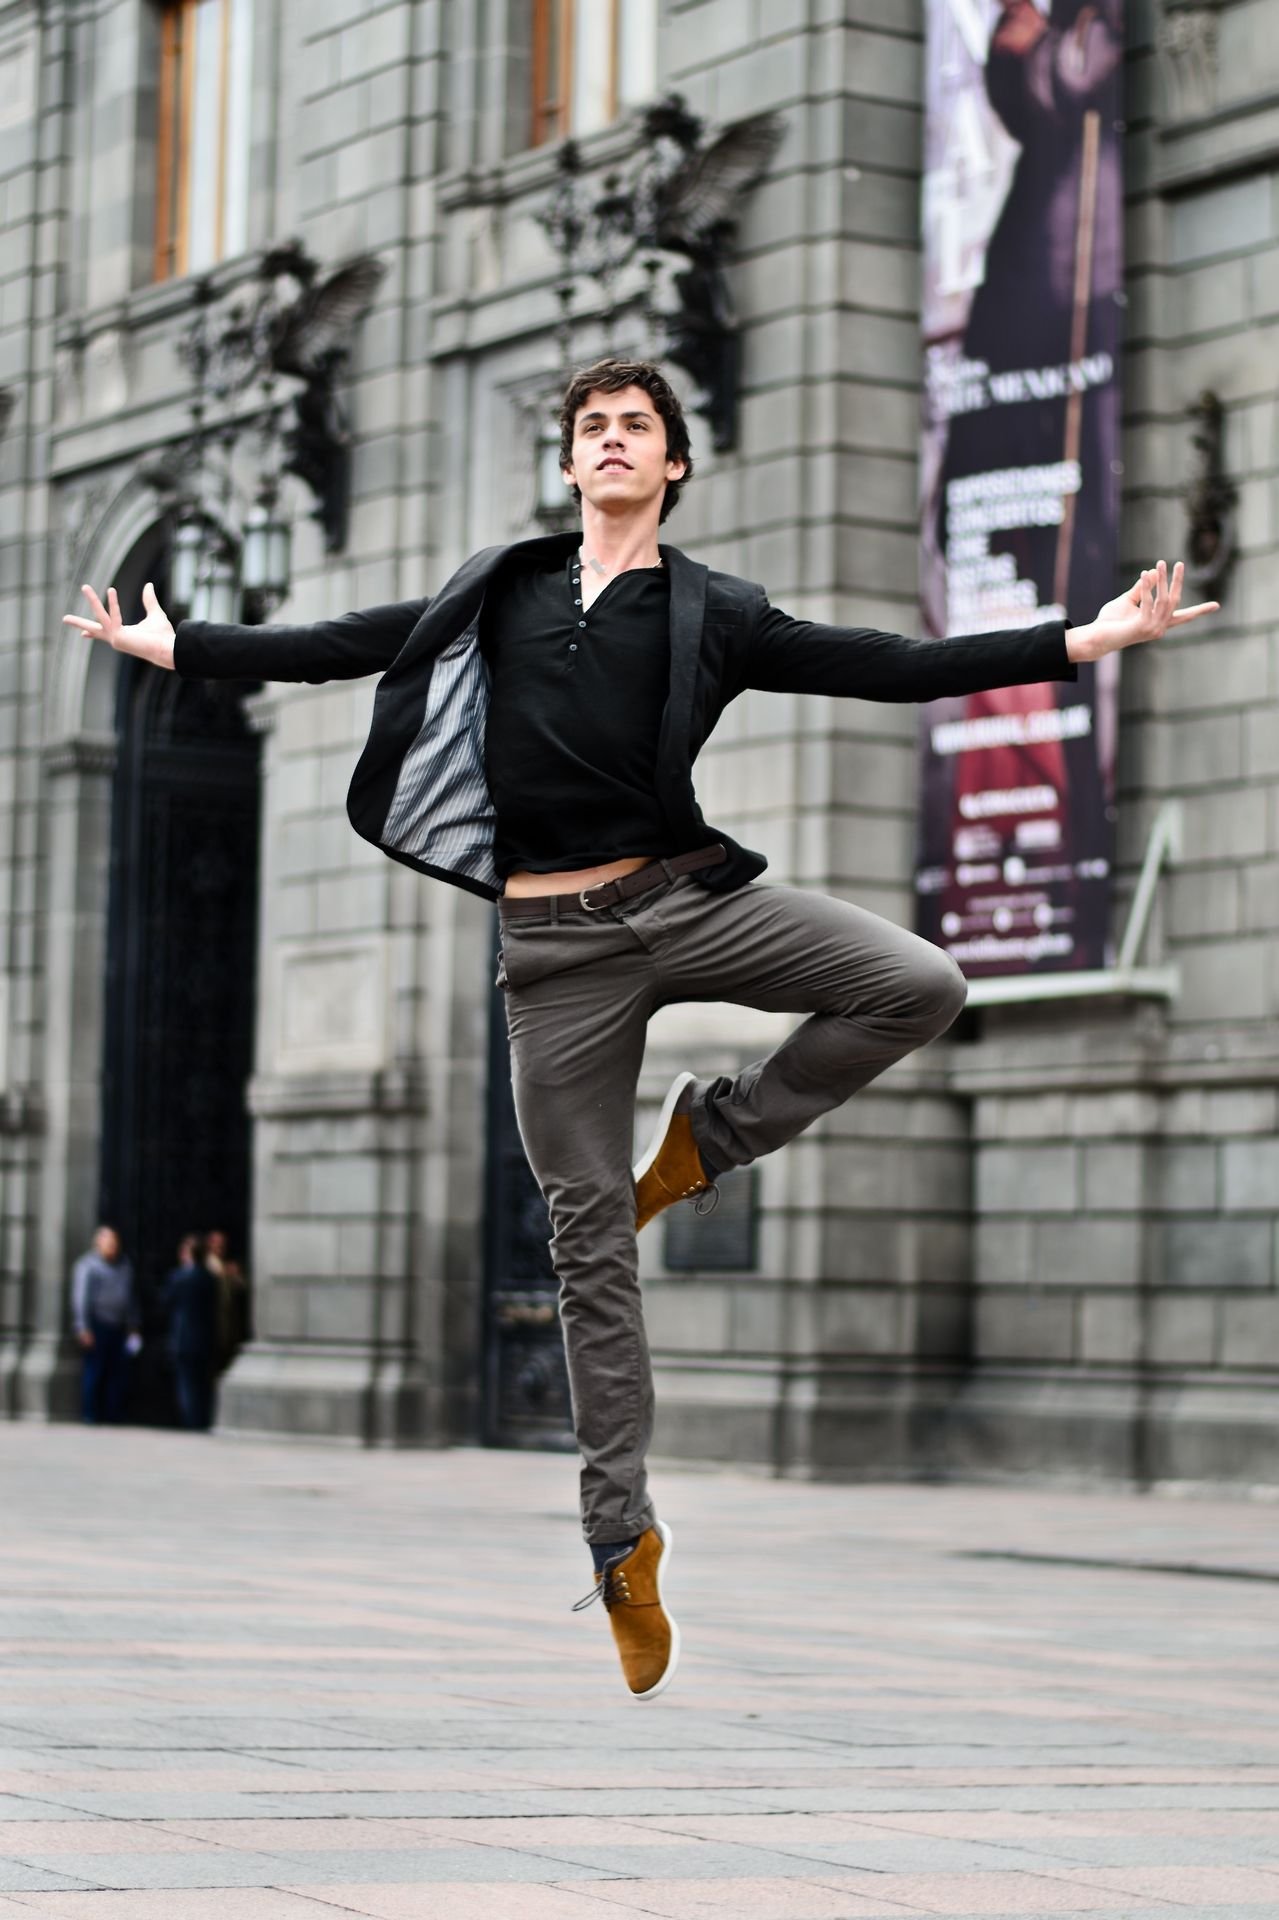 Мужик пляшет. Филип Марсден танцор. Карлос Кесада балерун. Карлос Квезада (Кесада ). Танцор балета.